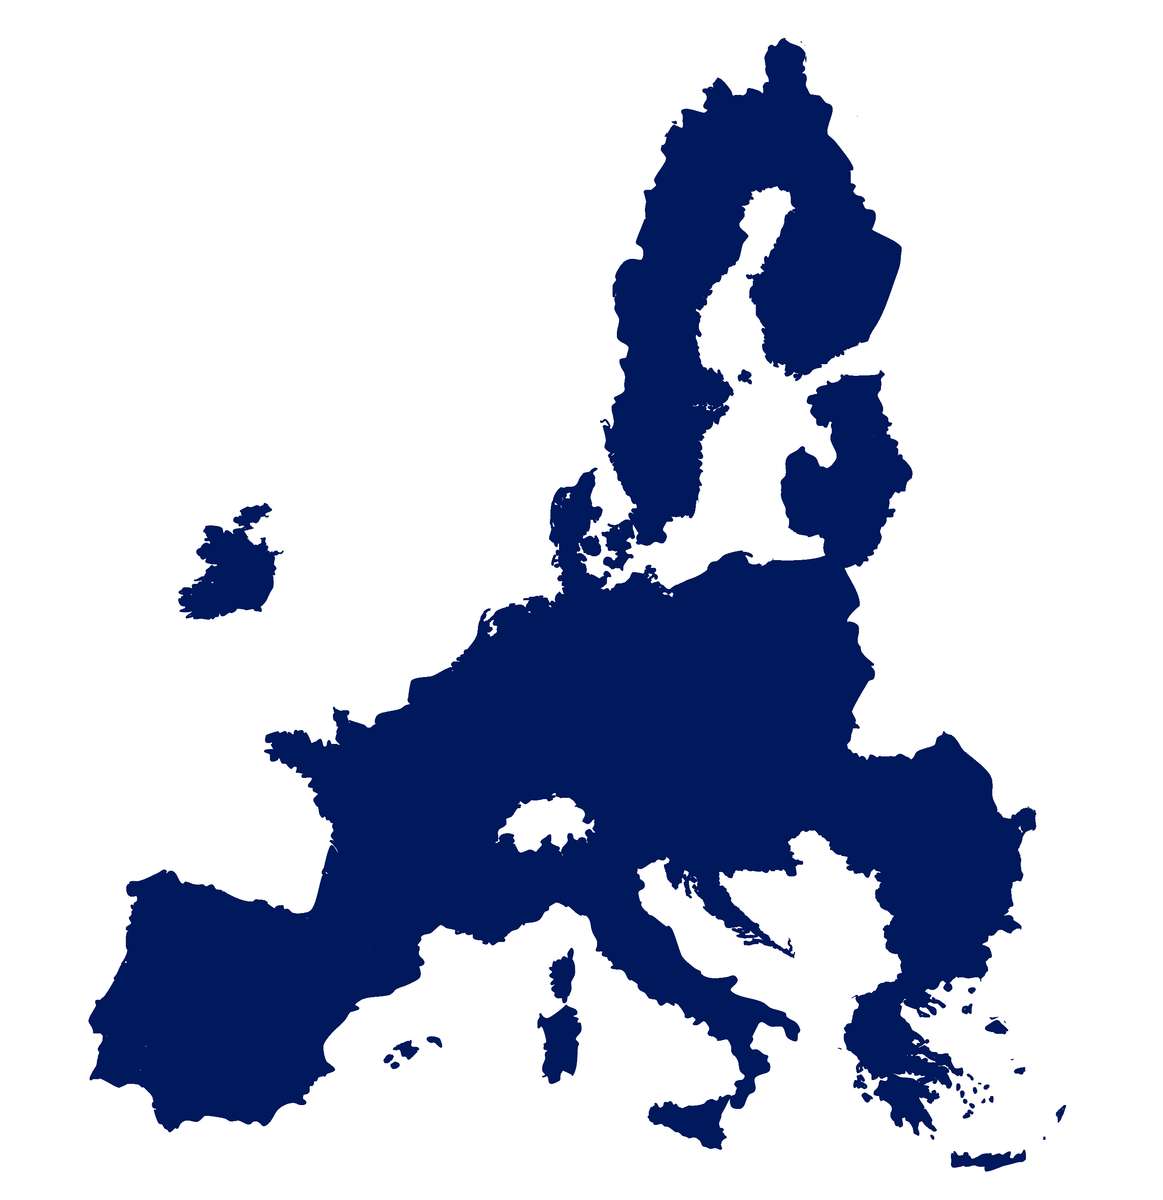 mapa da europa puzzle online a partir de fotografia